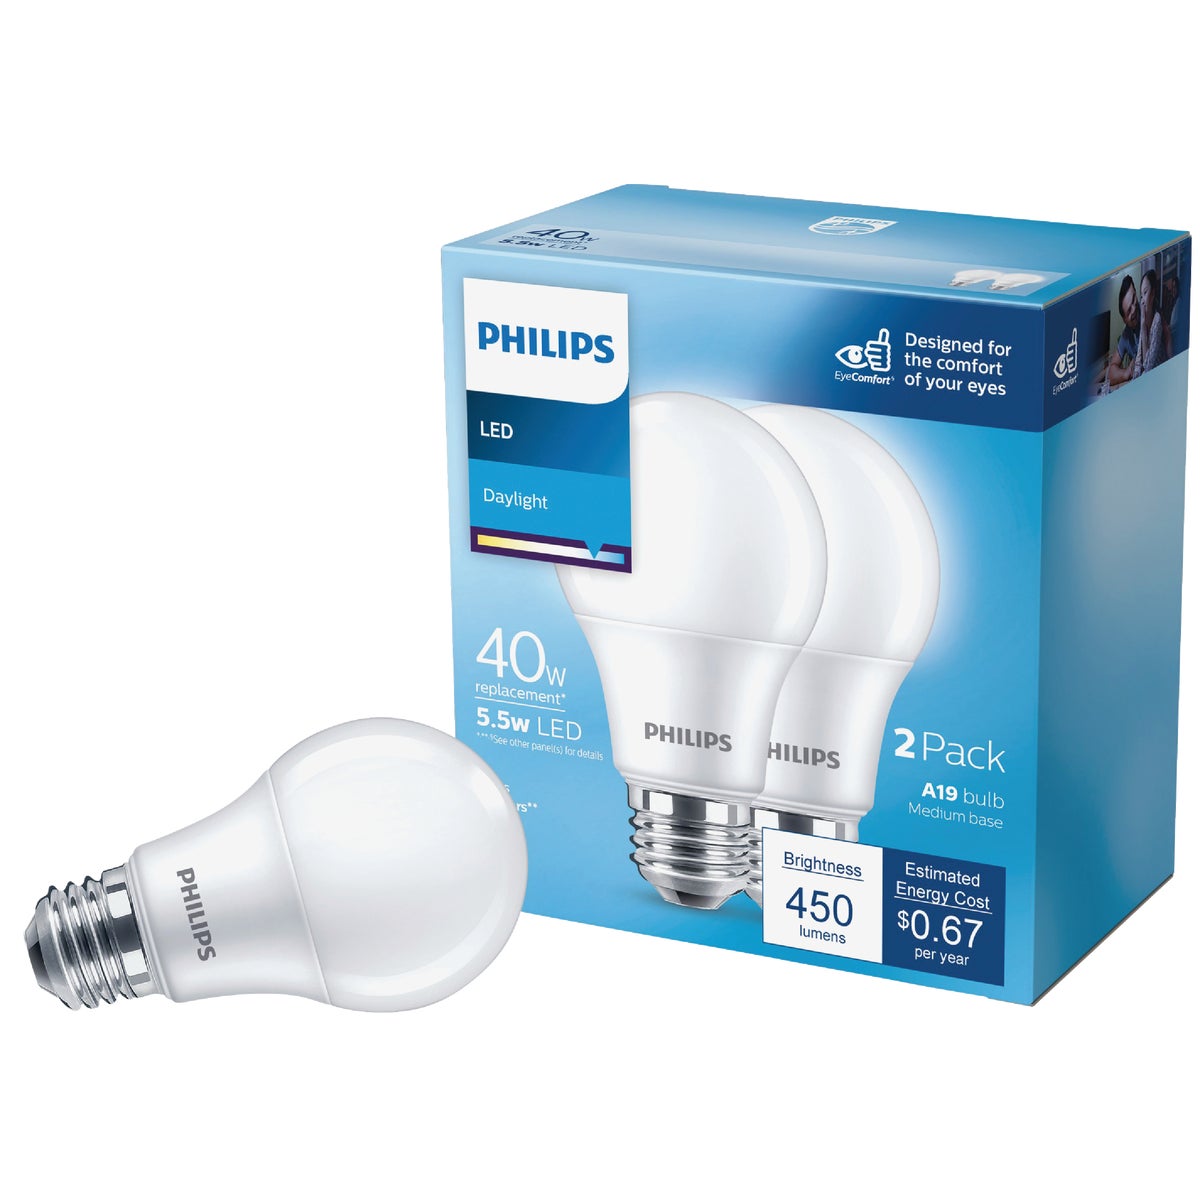 Item 501760, Philips LED (light emitting diode) A19 light bulb with medium base.